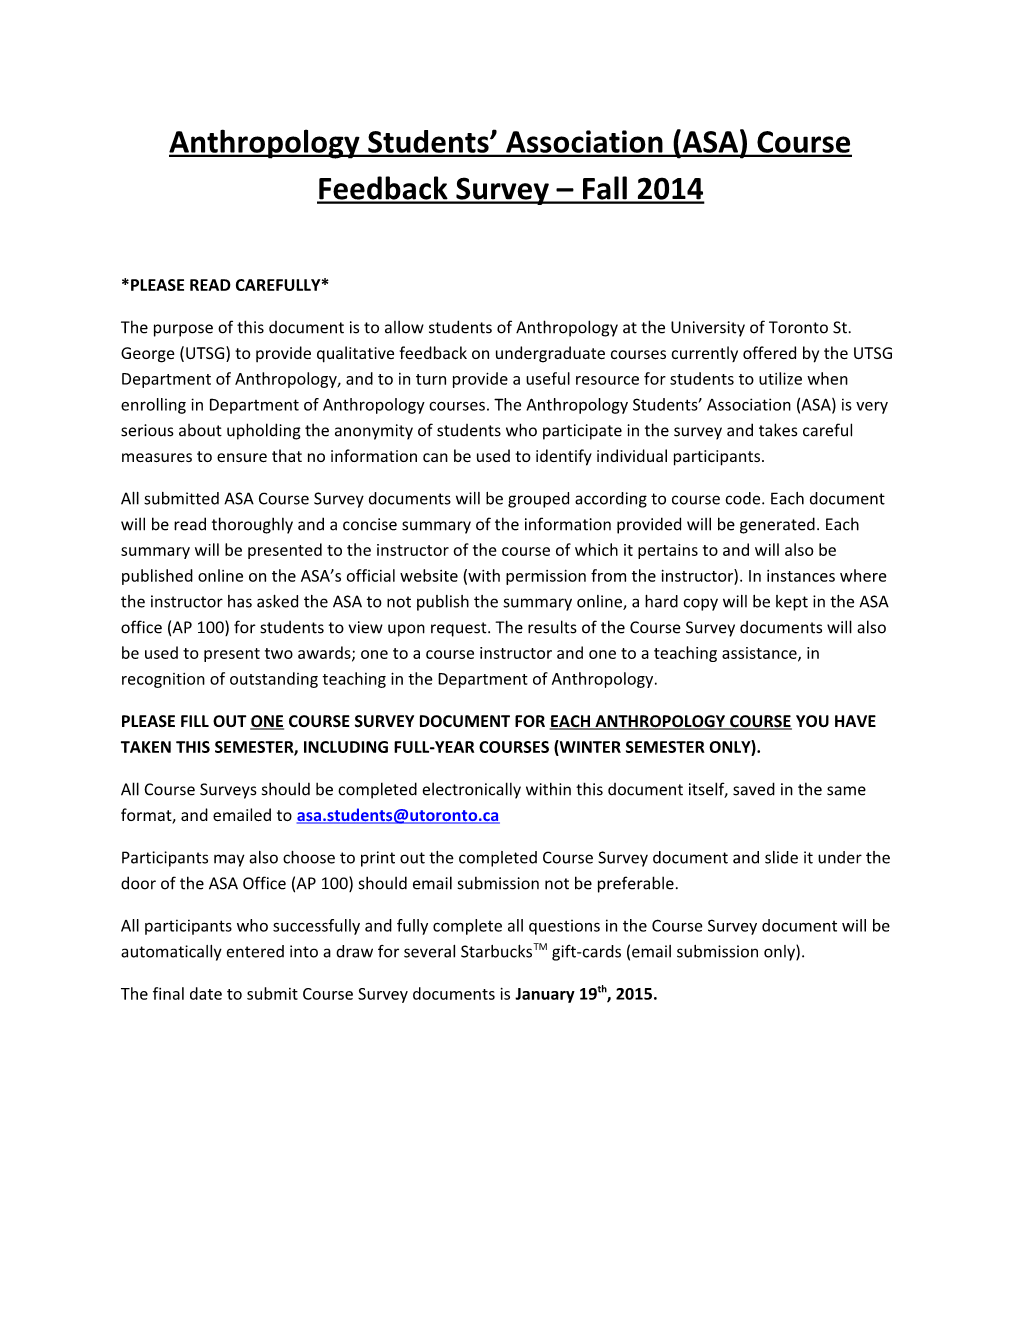 Anthropology Students Association (ASA) Course Feedback Survey Fall 2014